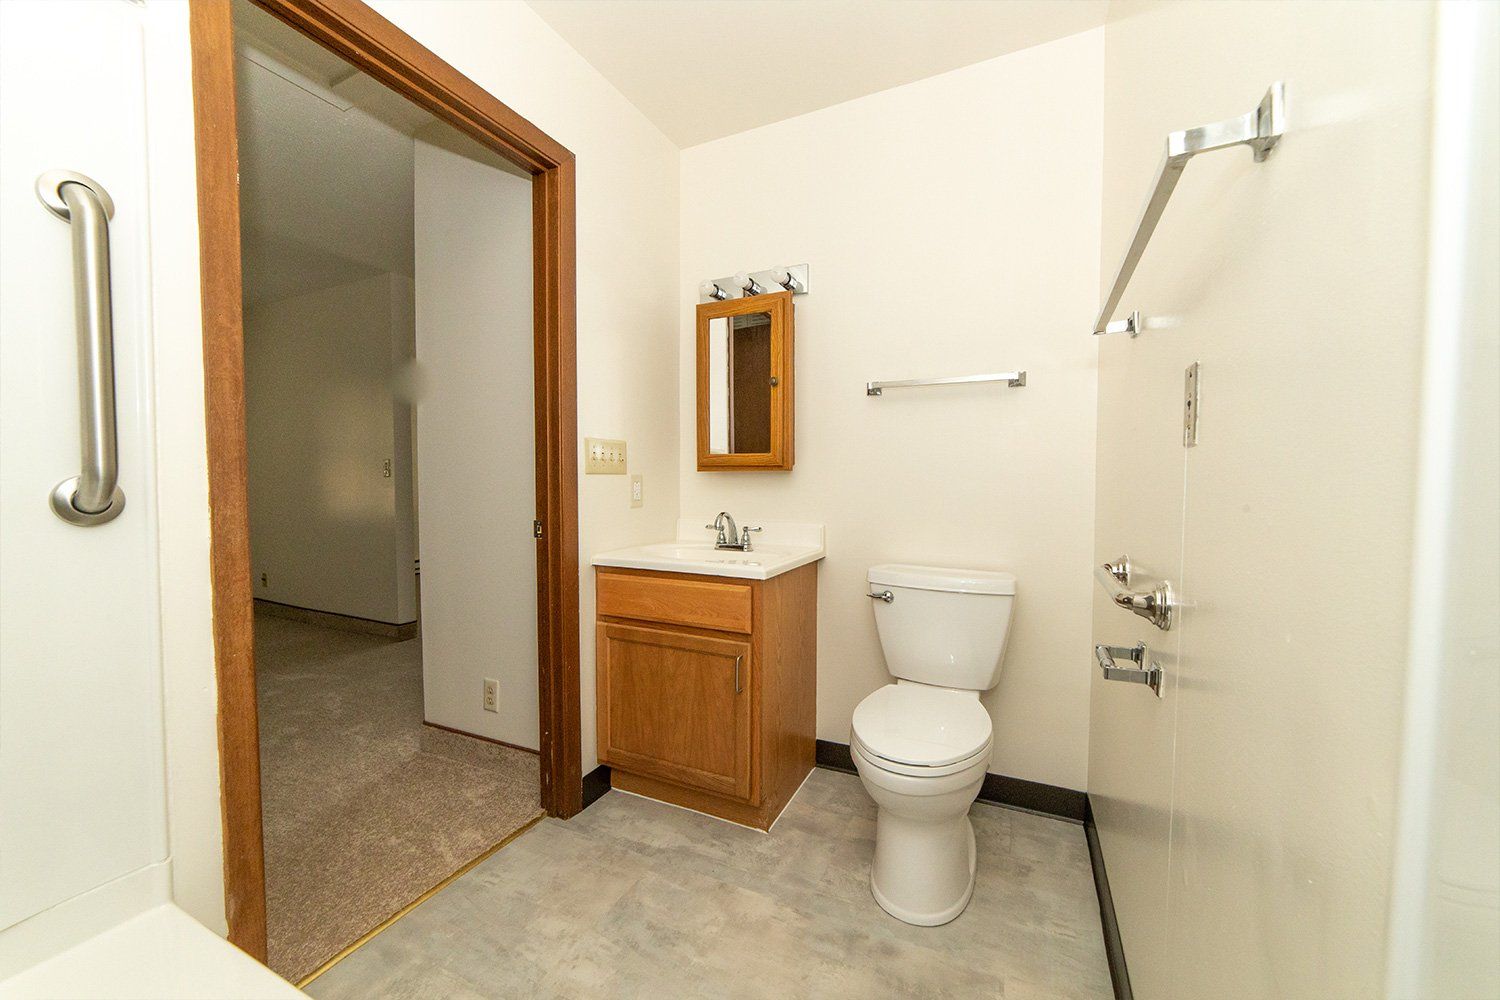 Apartment House Bathroom — Peoria, IL — St. Sharbel Village Apartments